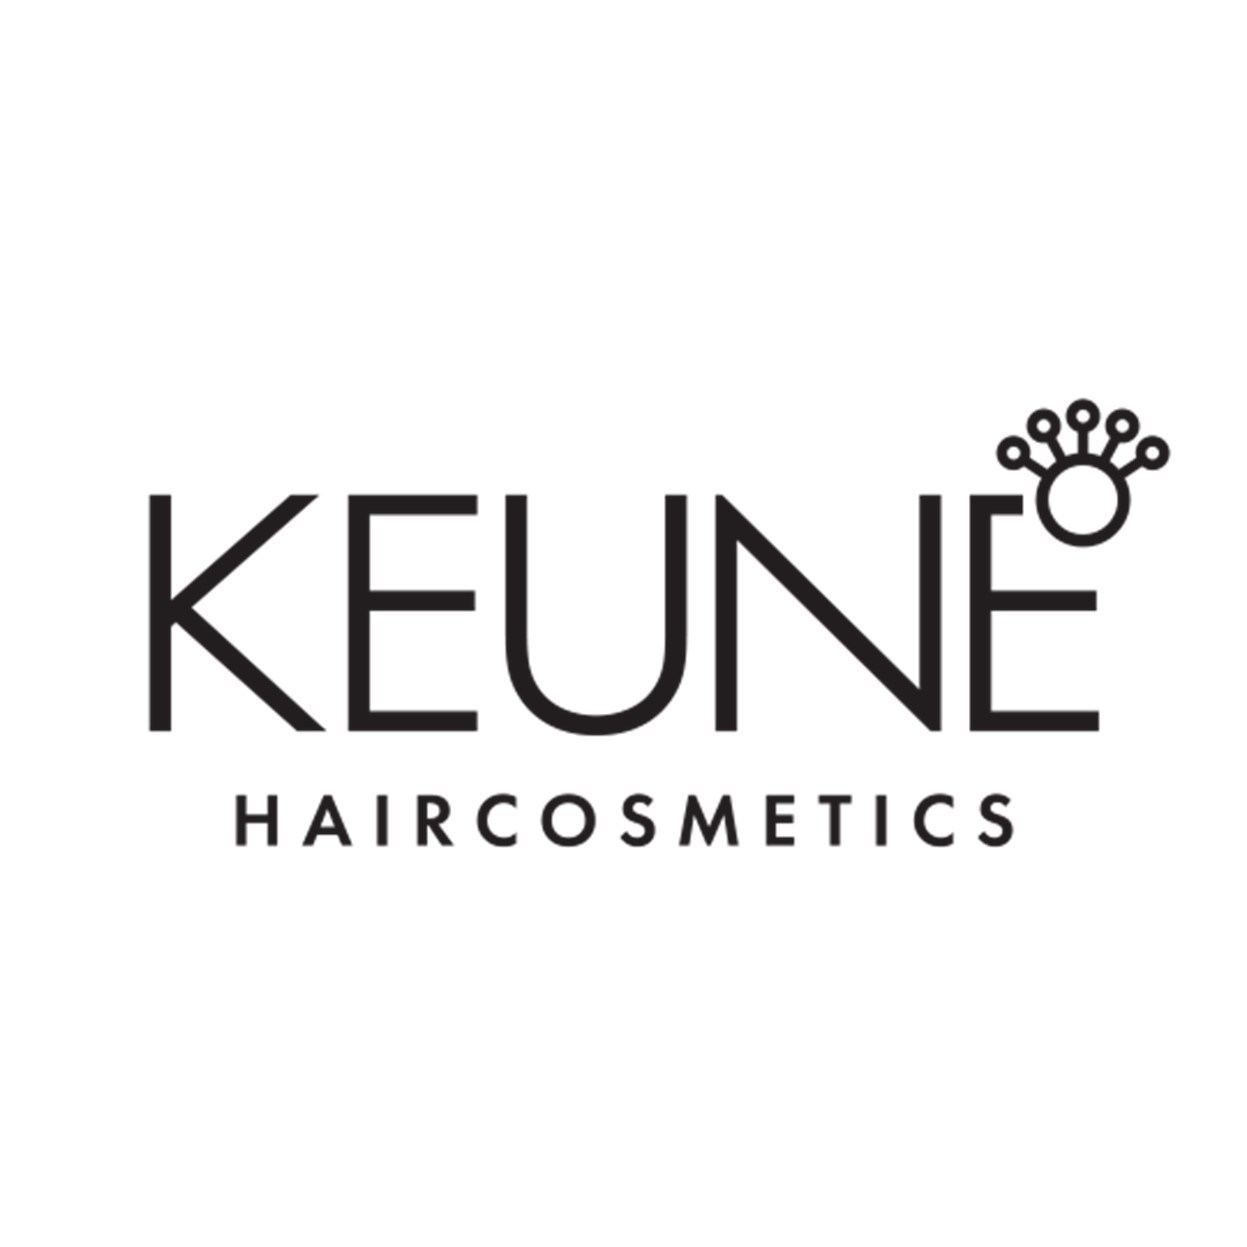 Stage bedrijfskunde Keune Haircosmetics